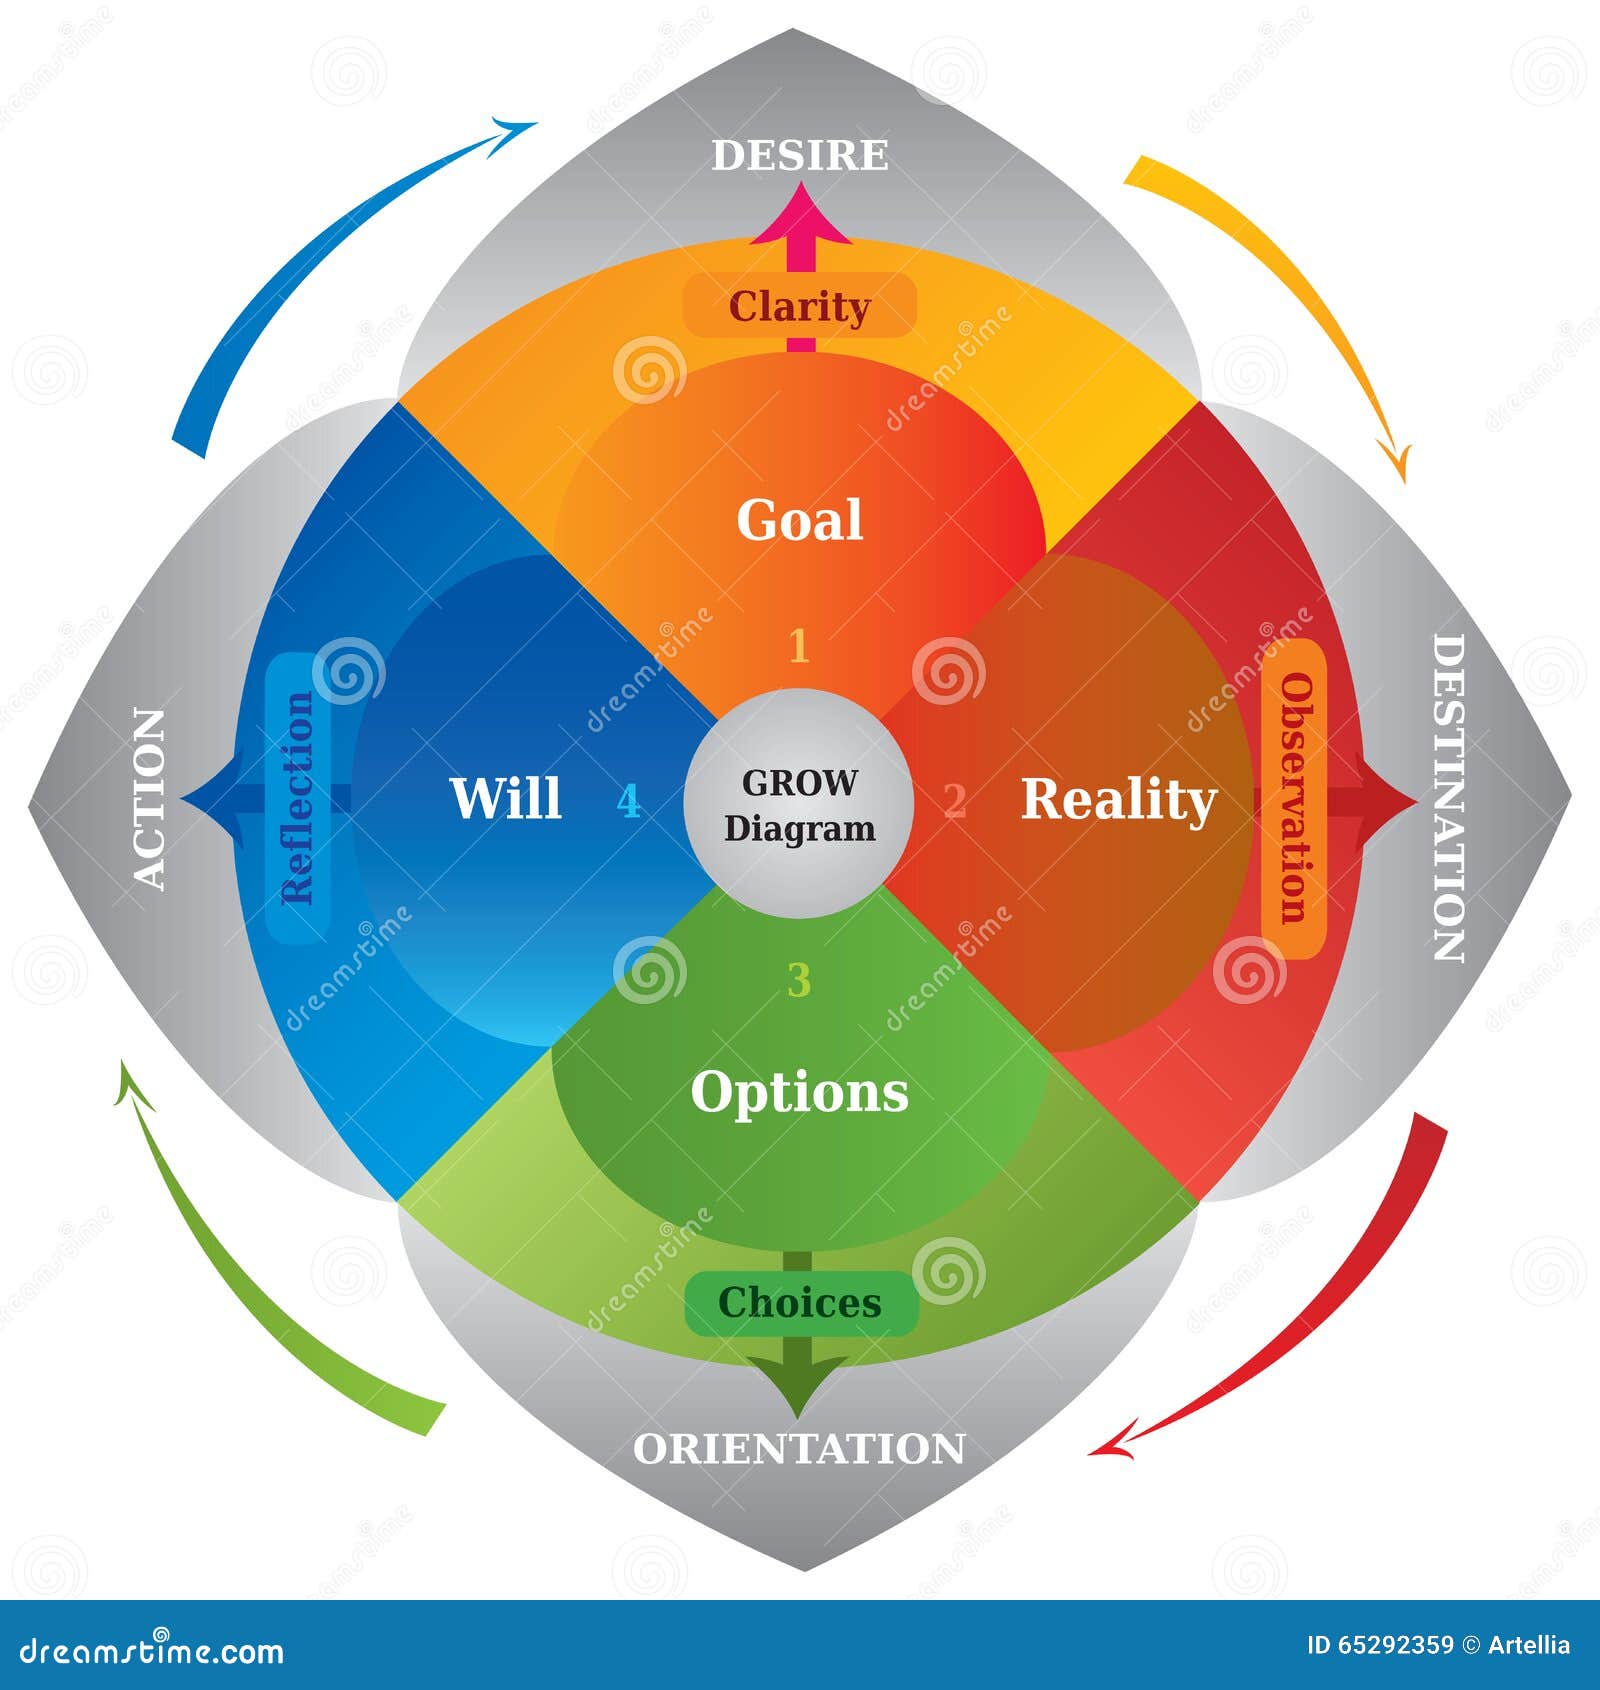 grow diagram - career coaching model - tool for business